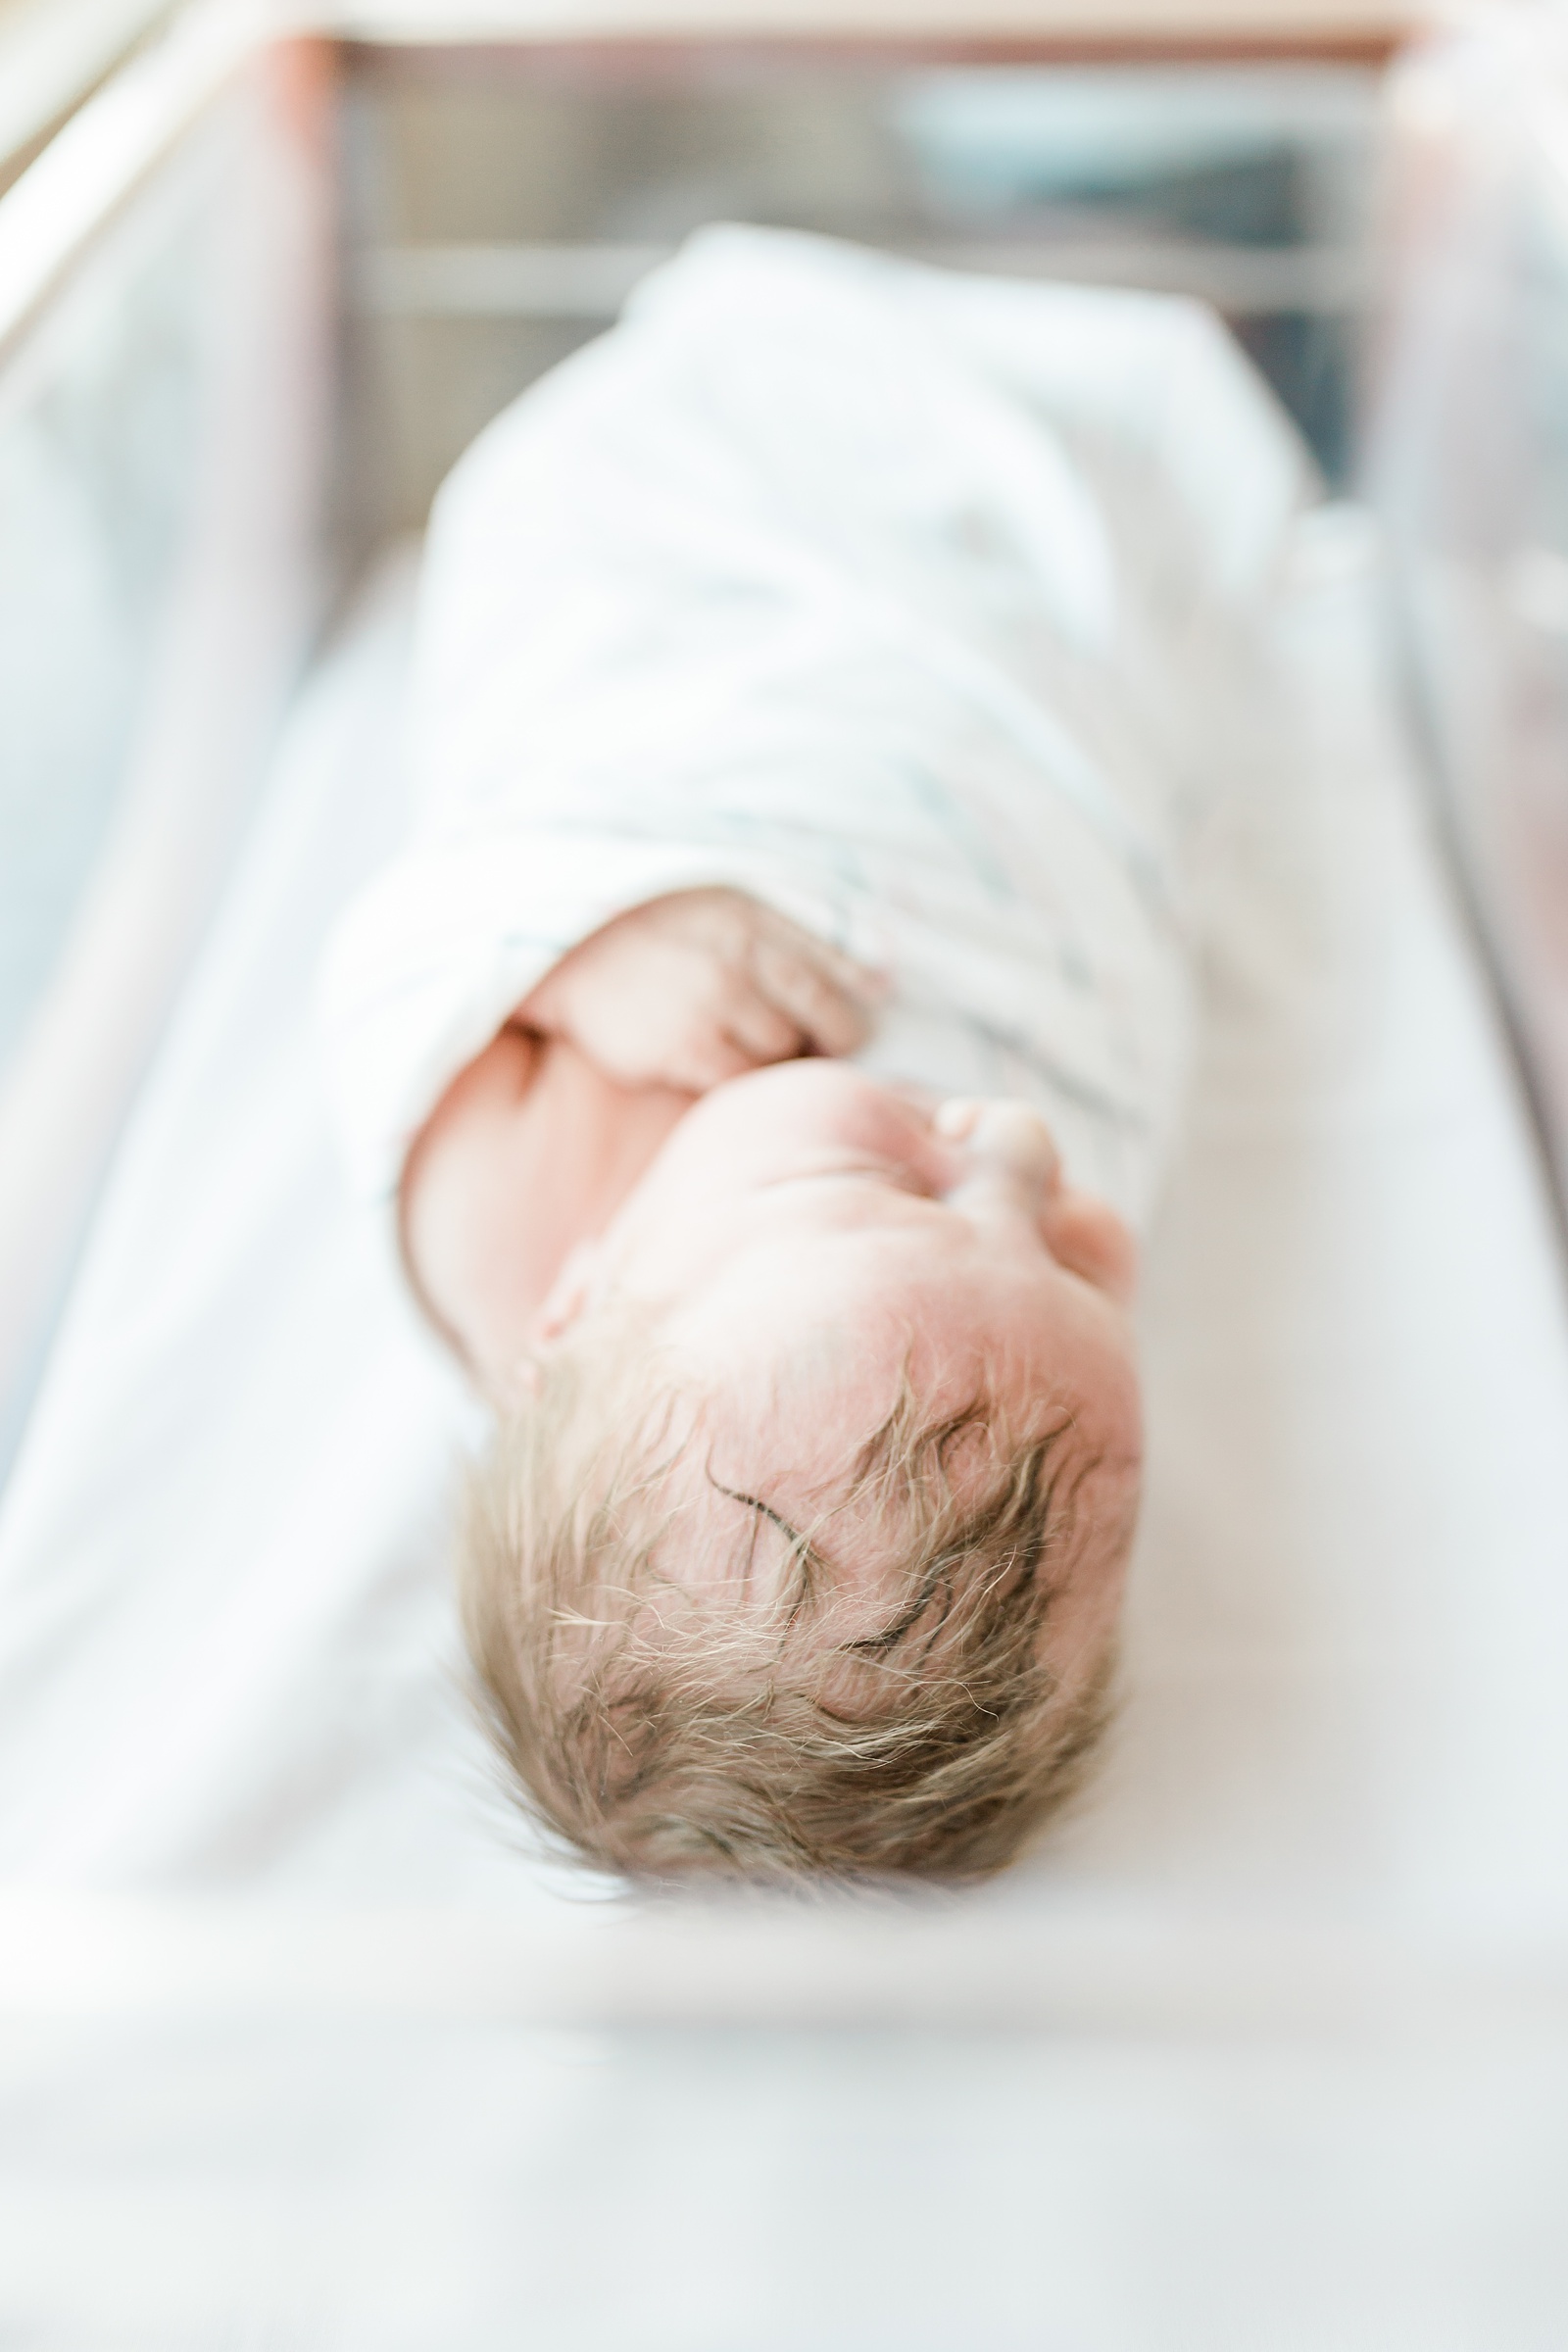 Newborn in hospital bassinet in Fresh 48 hospital session | Caitlyn Motycka Photography